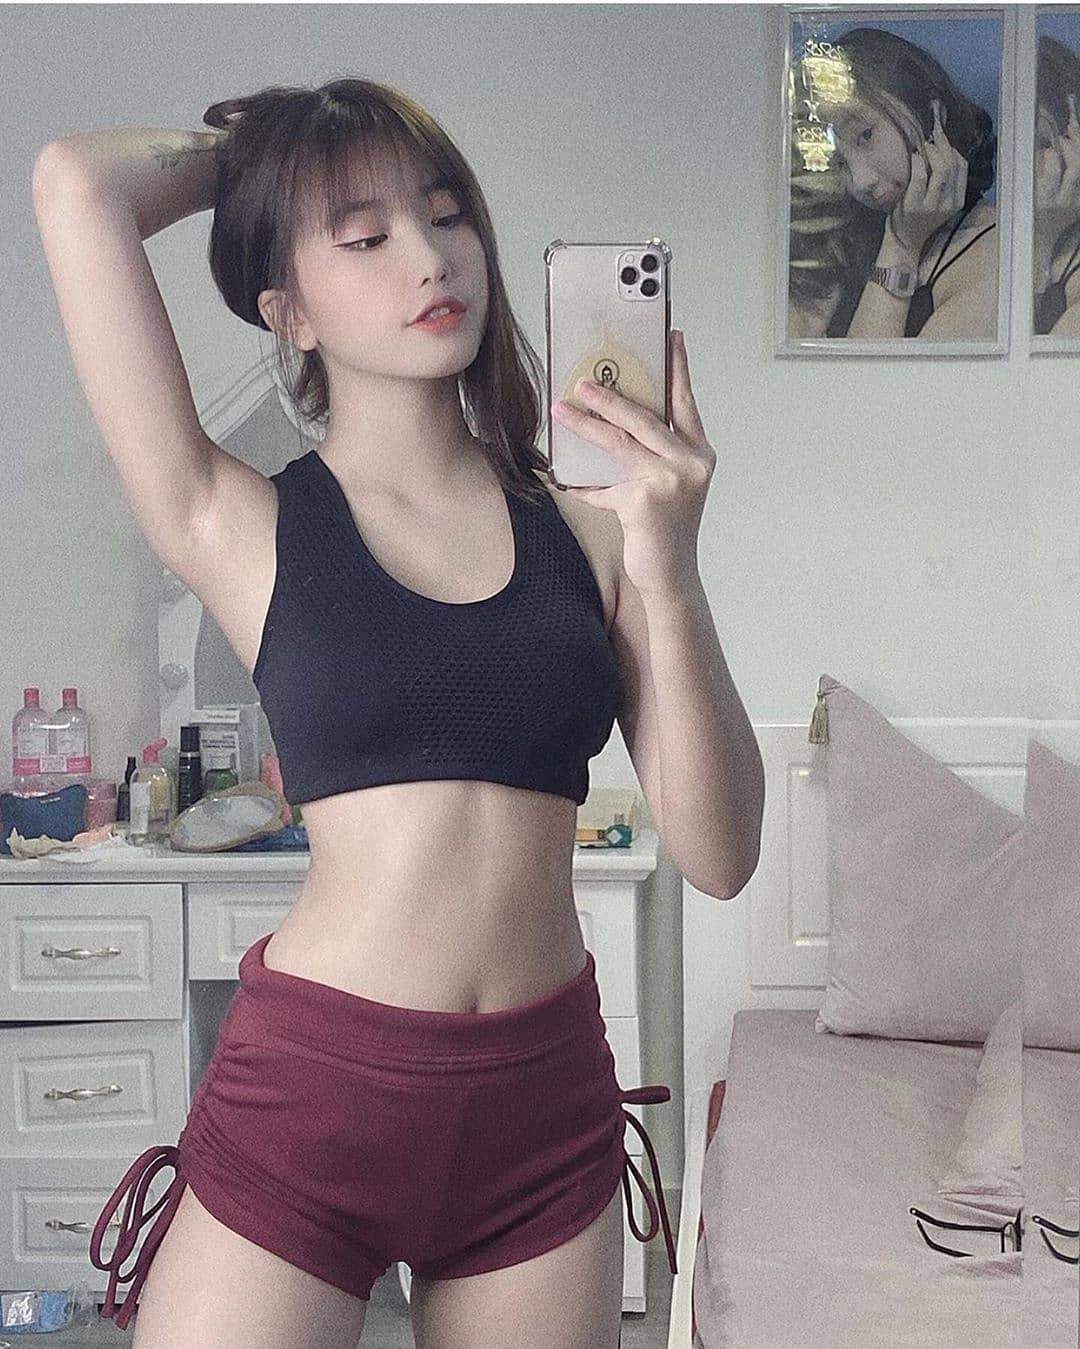 Petite Vietnamese Teen Cutie Selfie With A Tiny Sexy Body